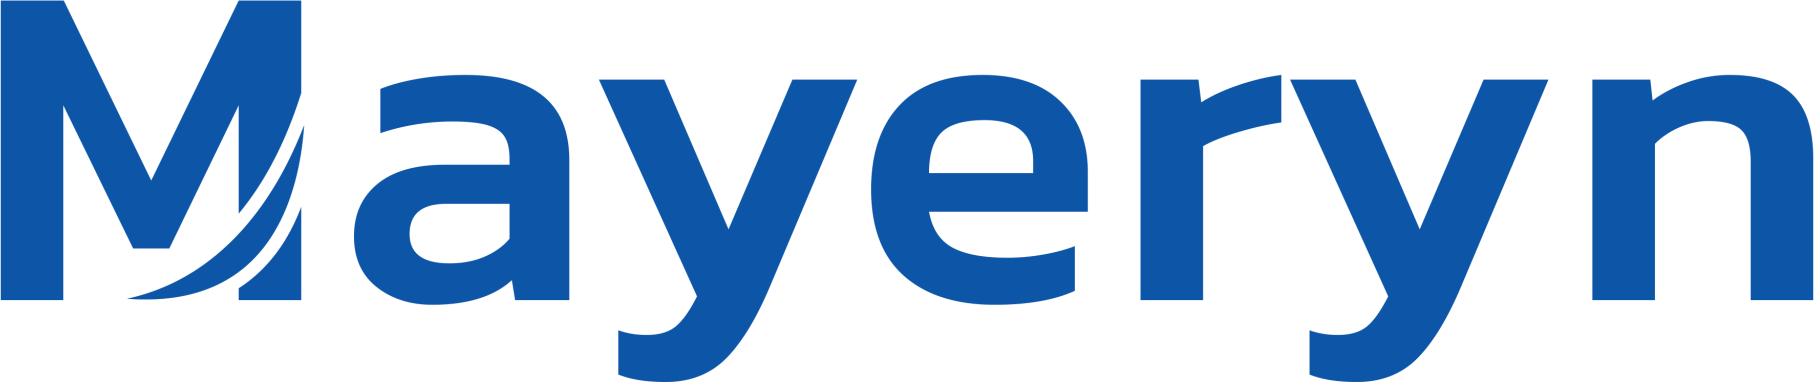 mayeryn-logo